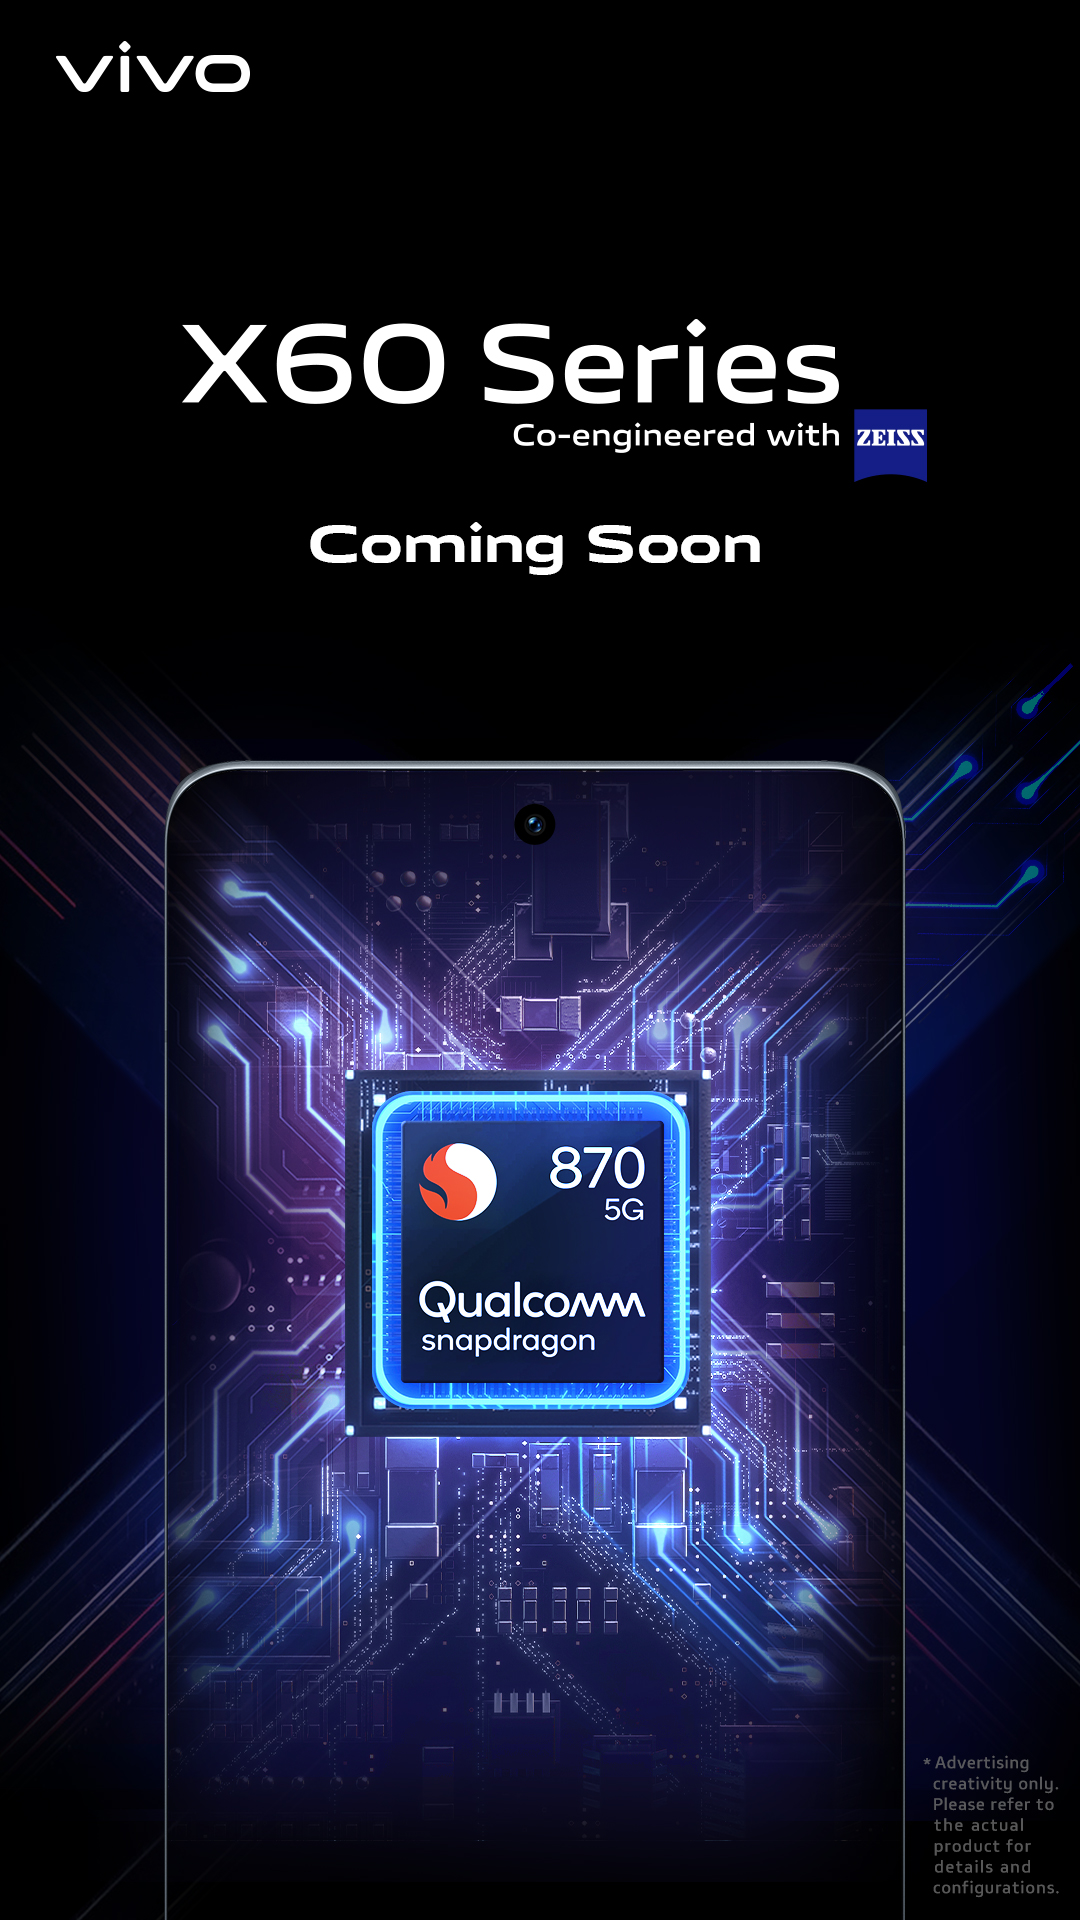 Qualcomm Snapdragon 870